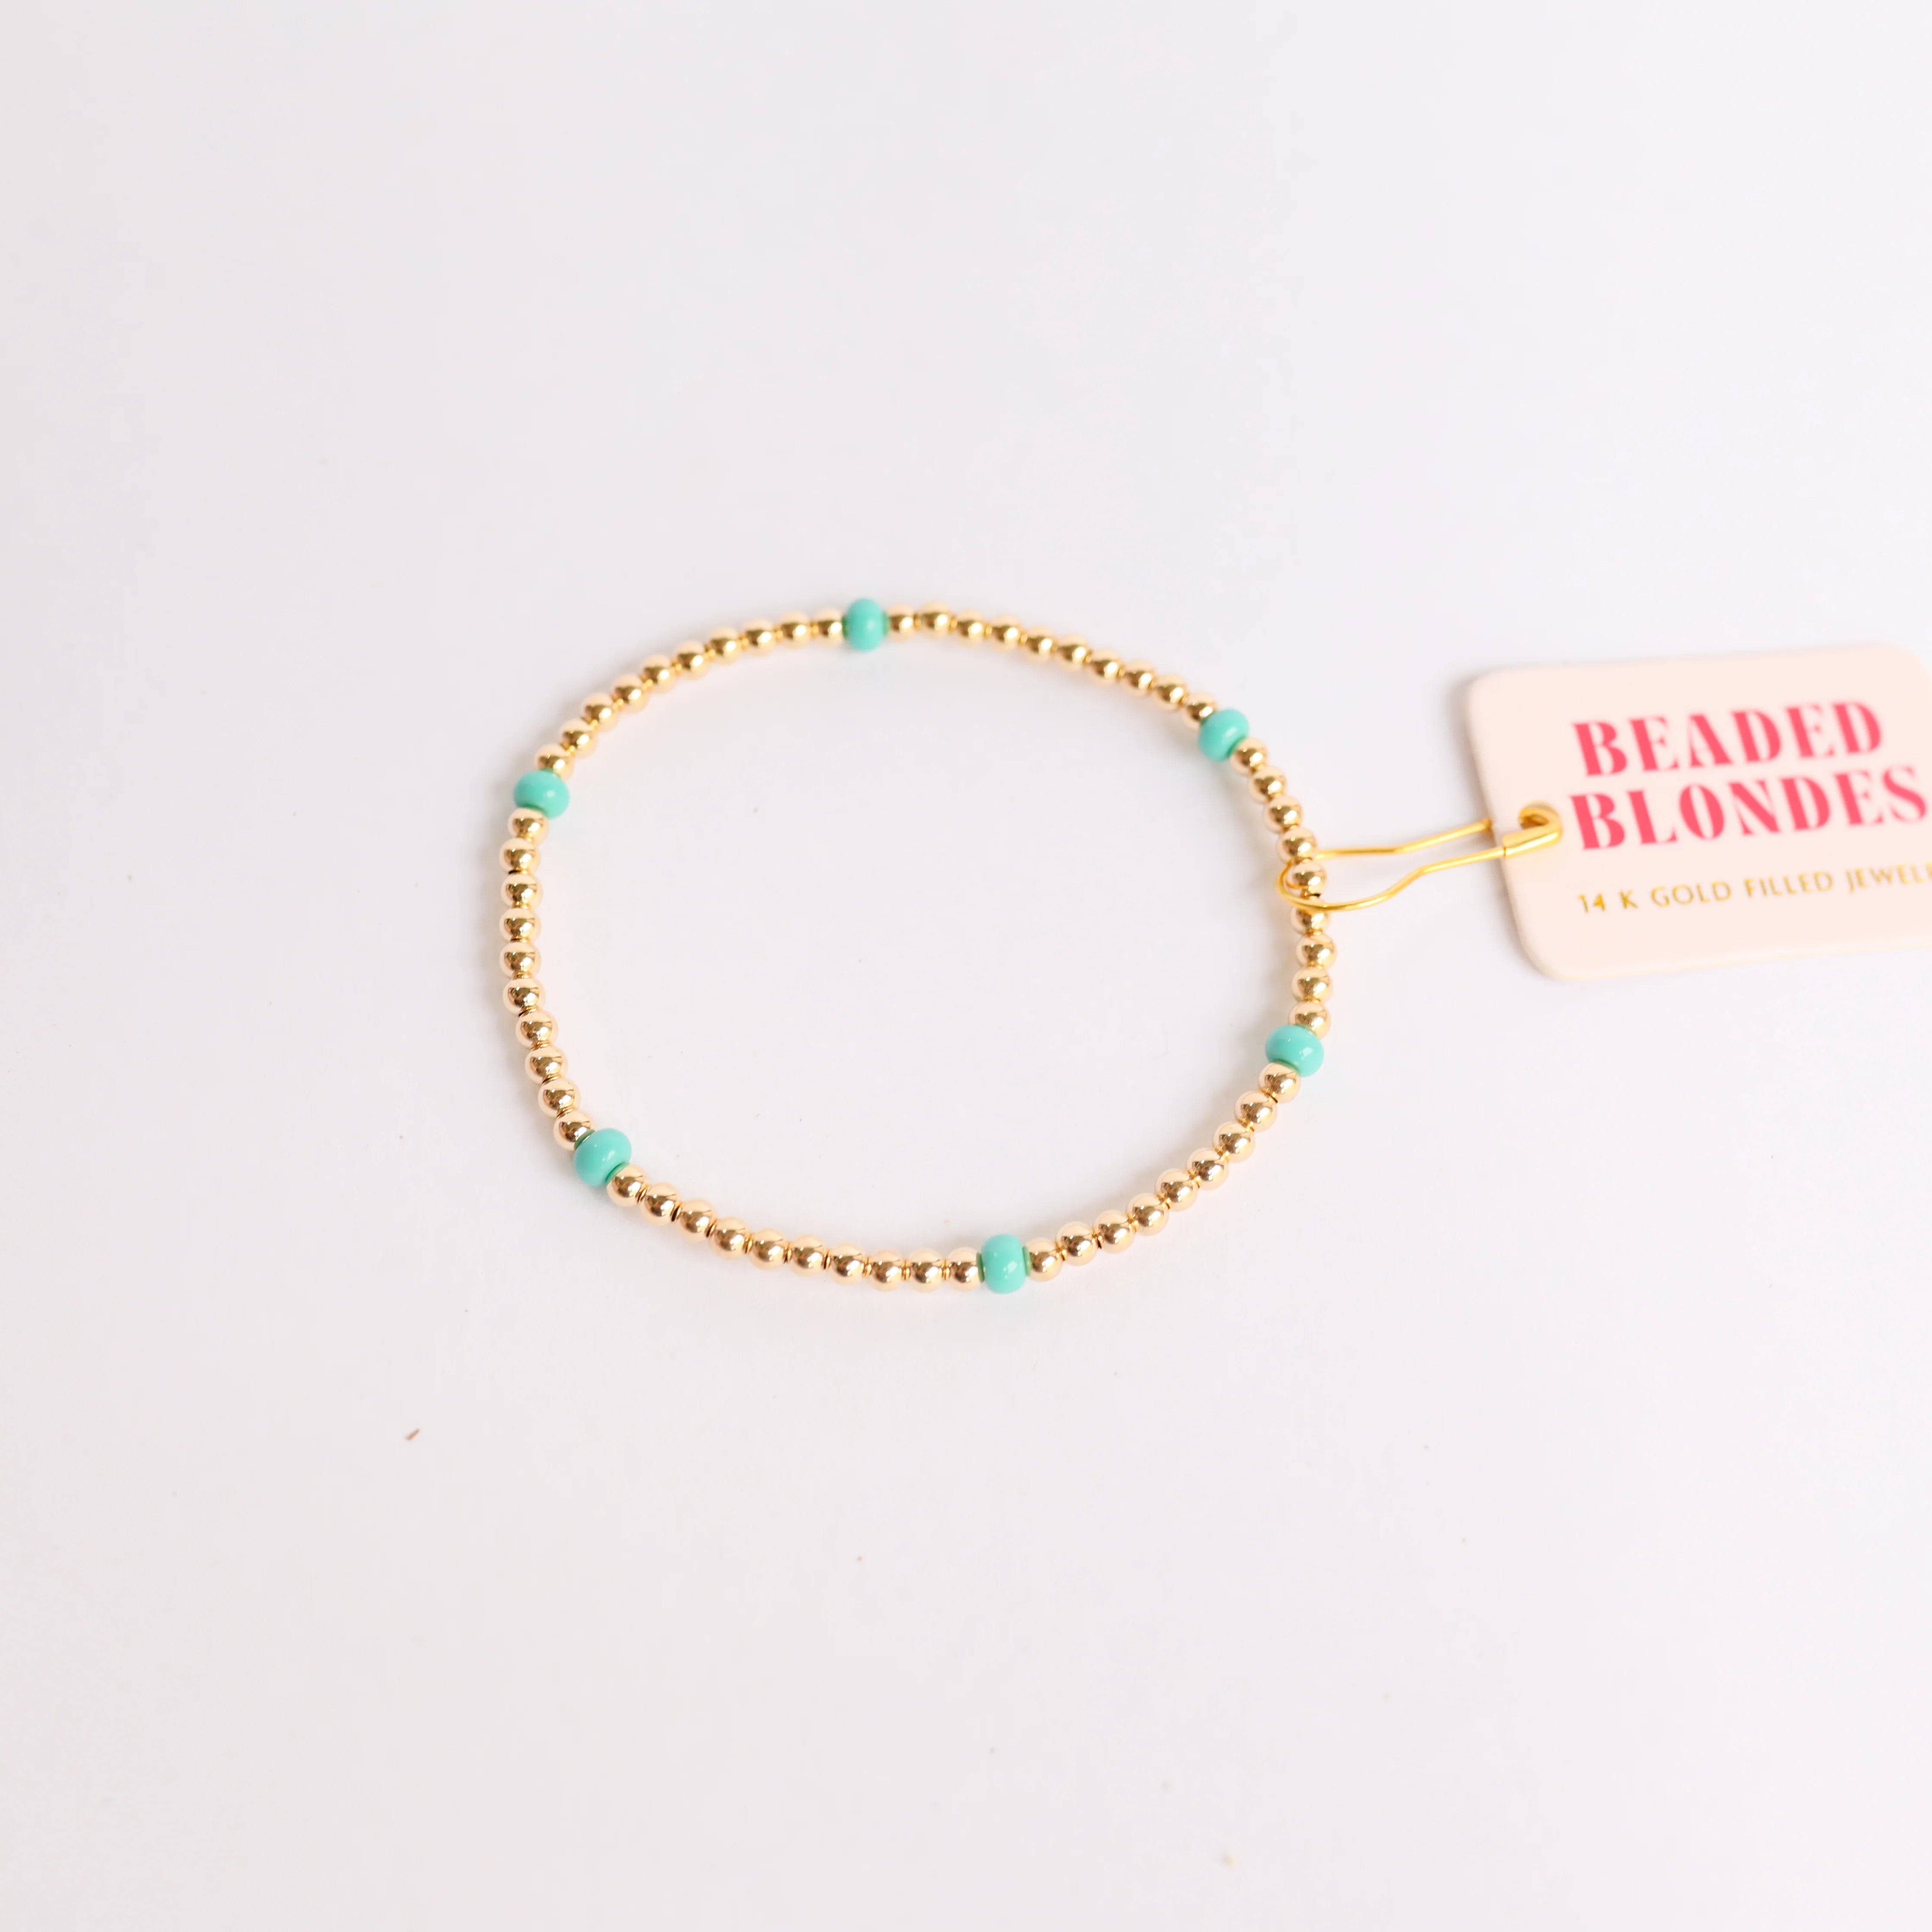 Beaded Blondes | Turquoise Blue Poppi Bracelet - Giddy Up Glamour Boutique